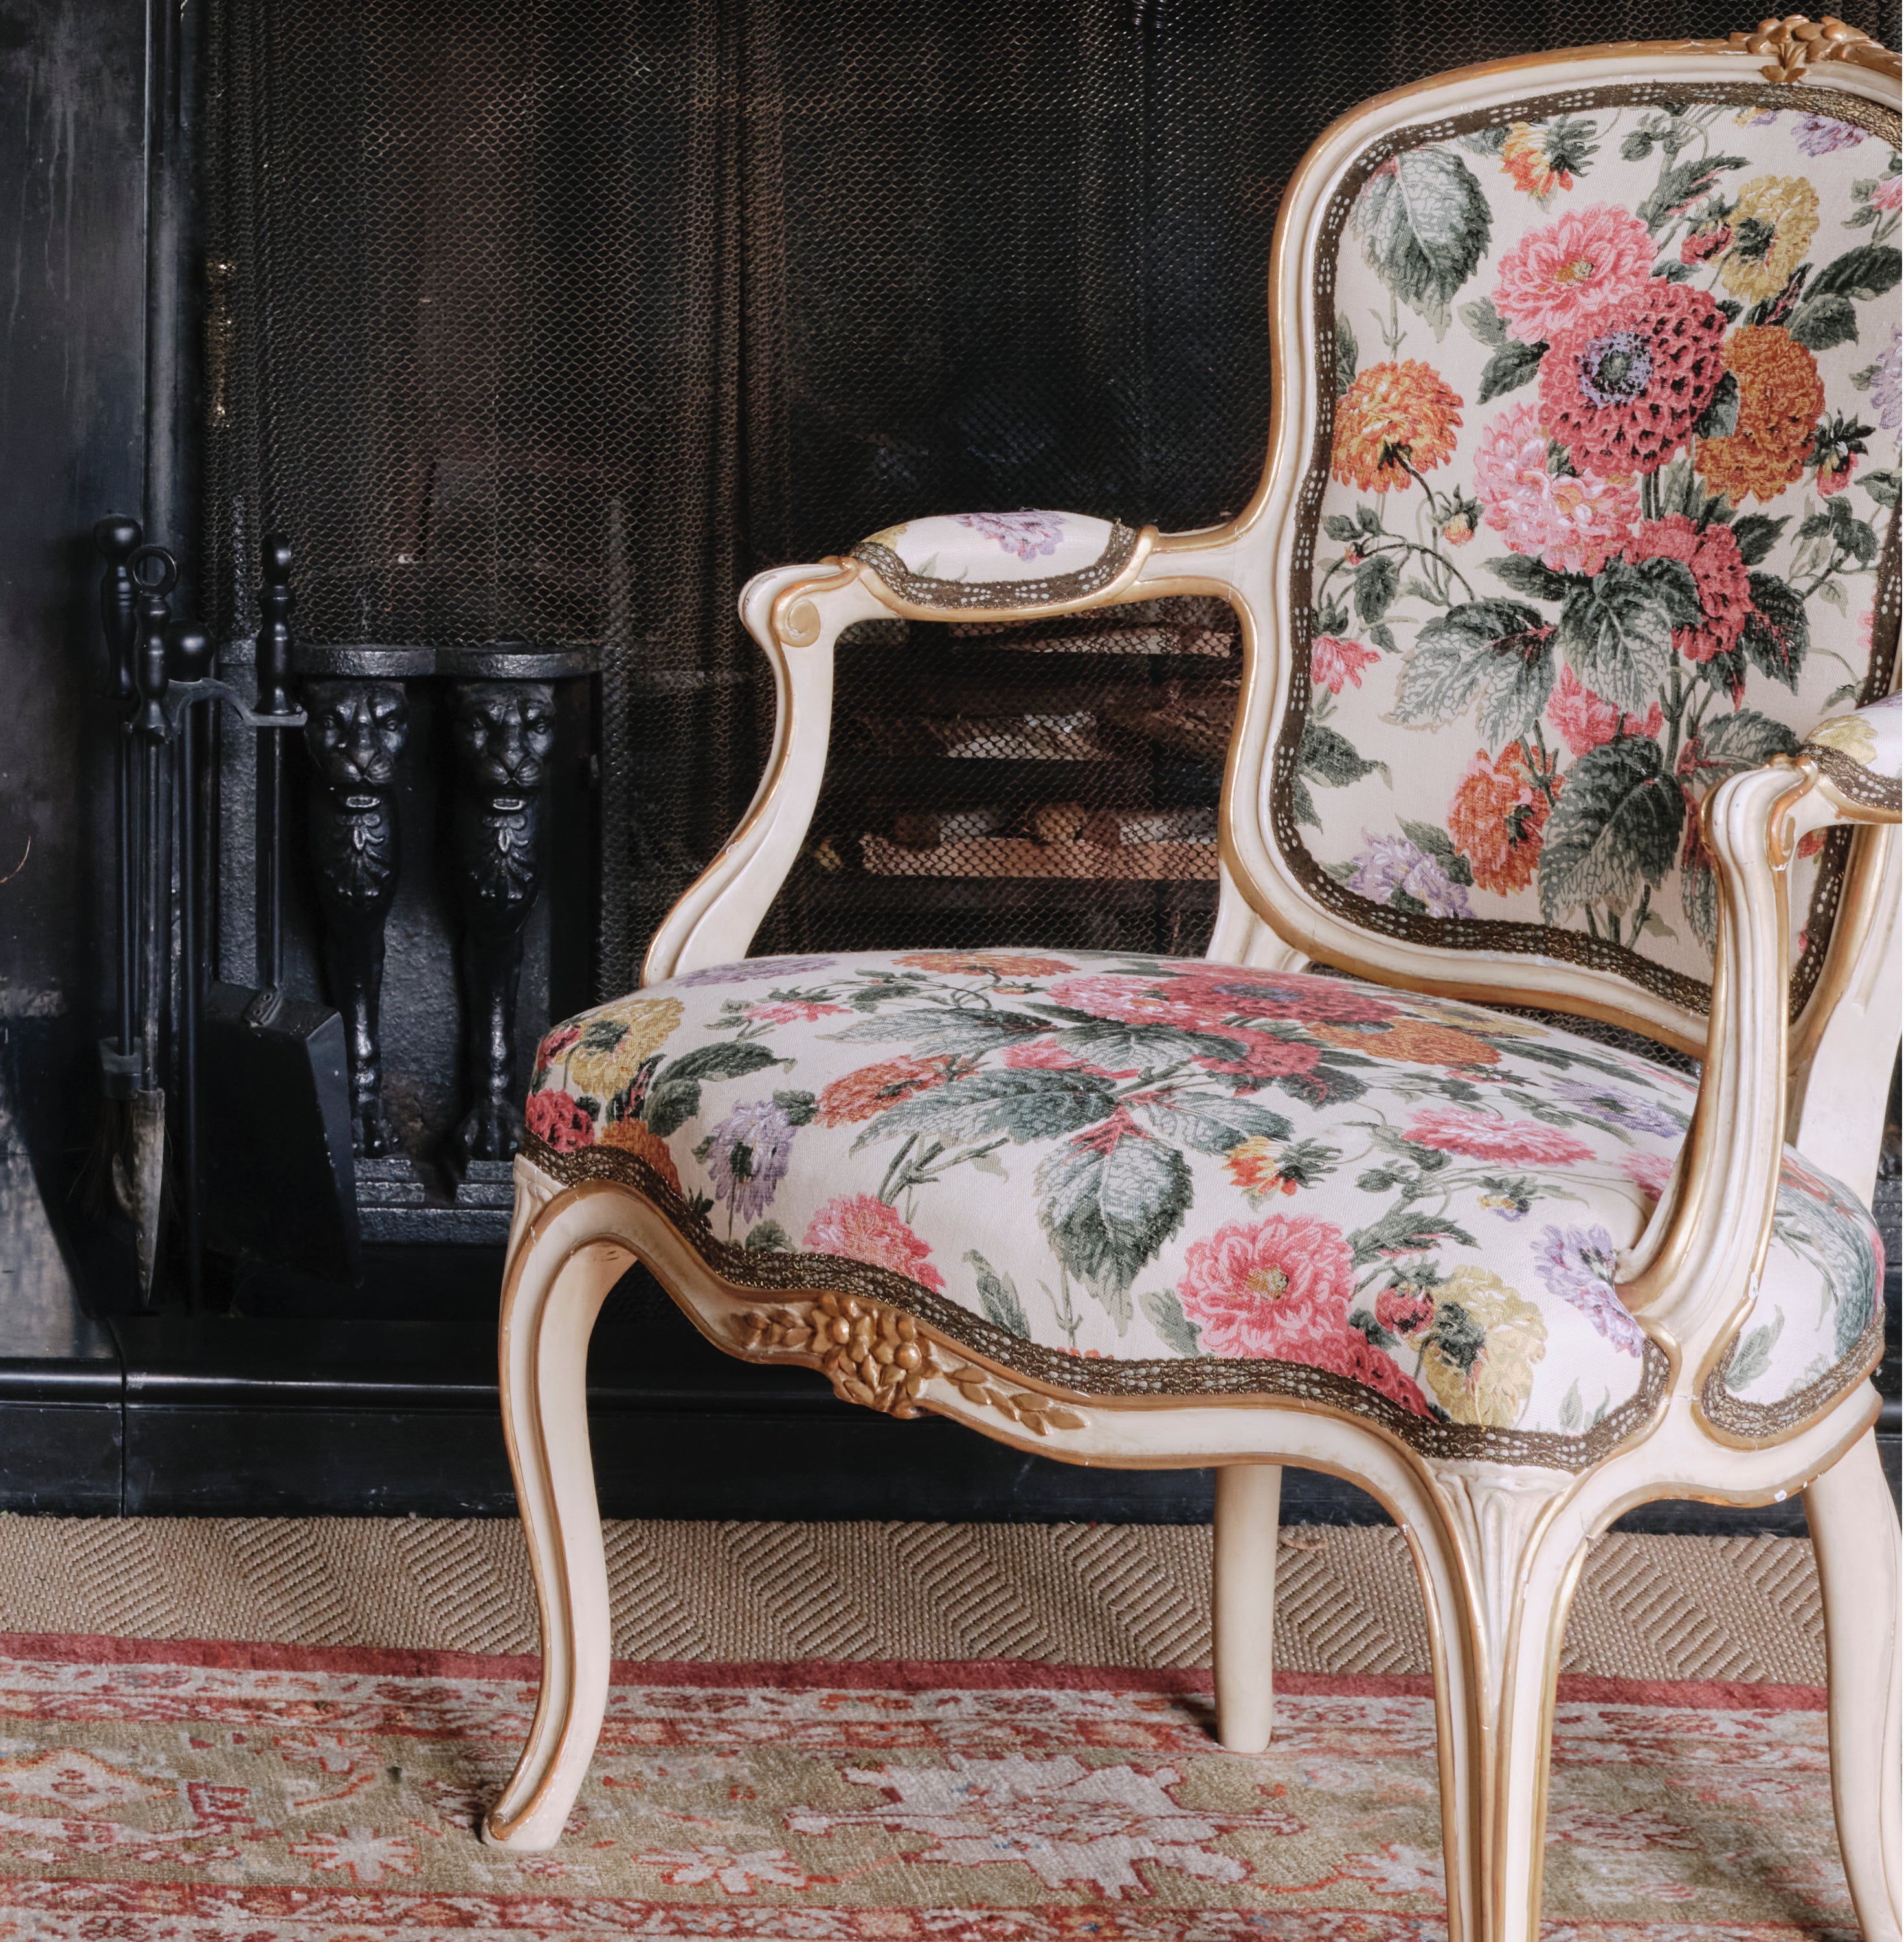 A 19th Century Parcel-Gilt Salon Chair in Flora Soames Dahlias with Antique Gold Decorated Braid